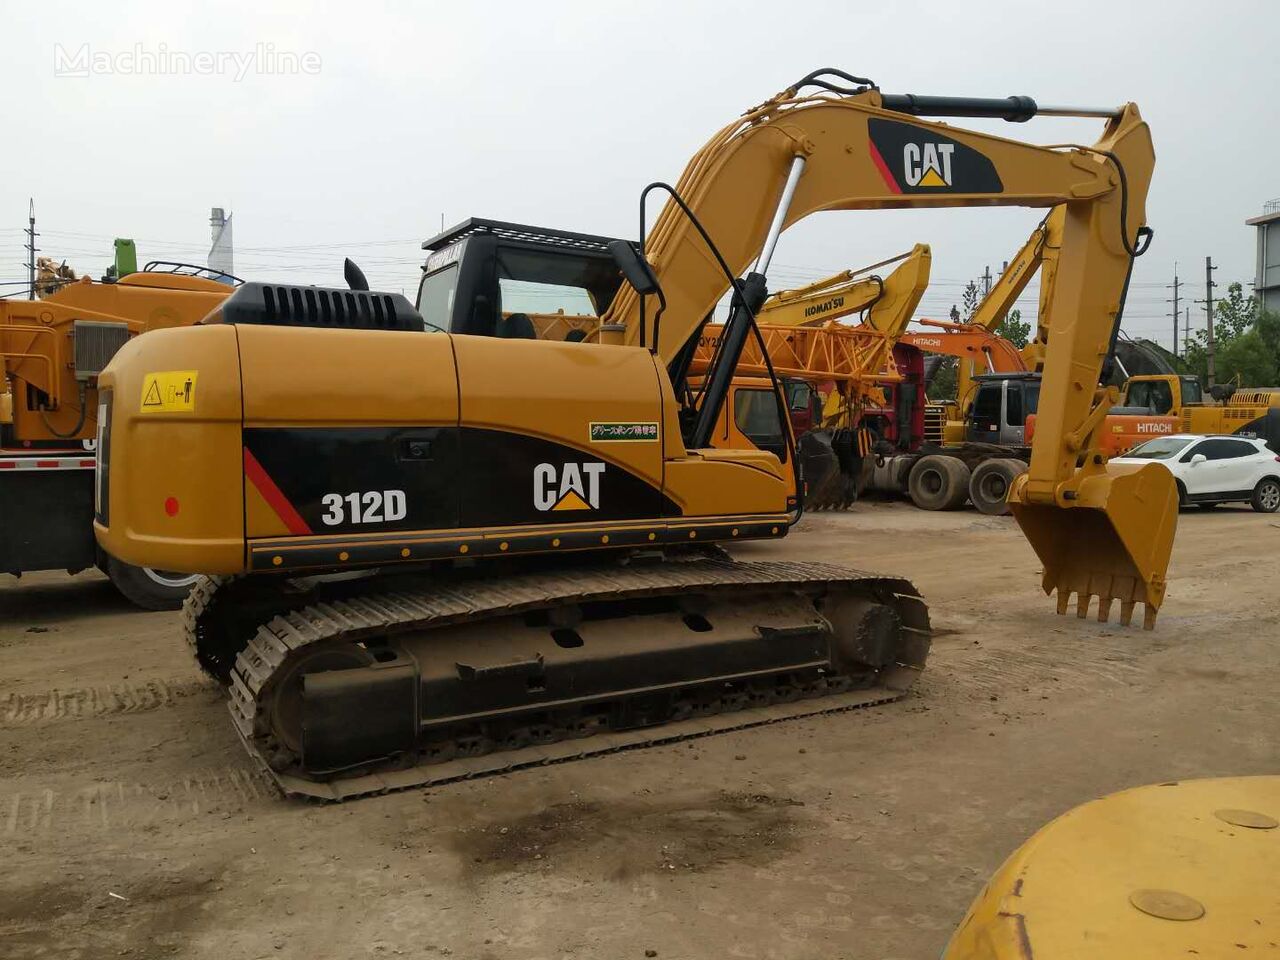 Caterpillar 312D tracked excavator